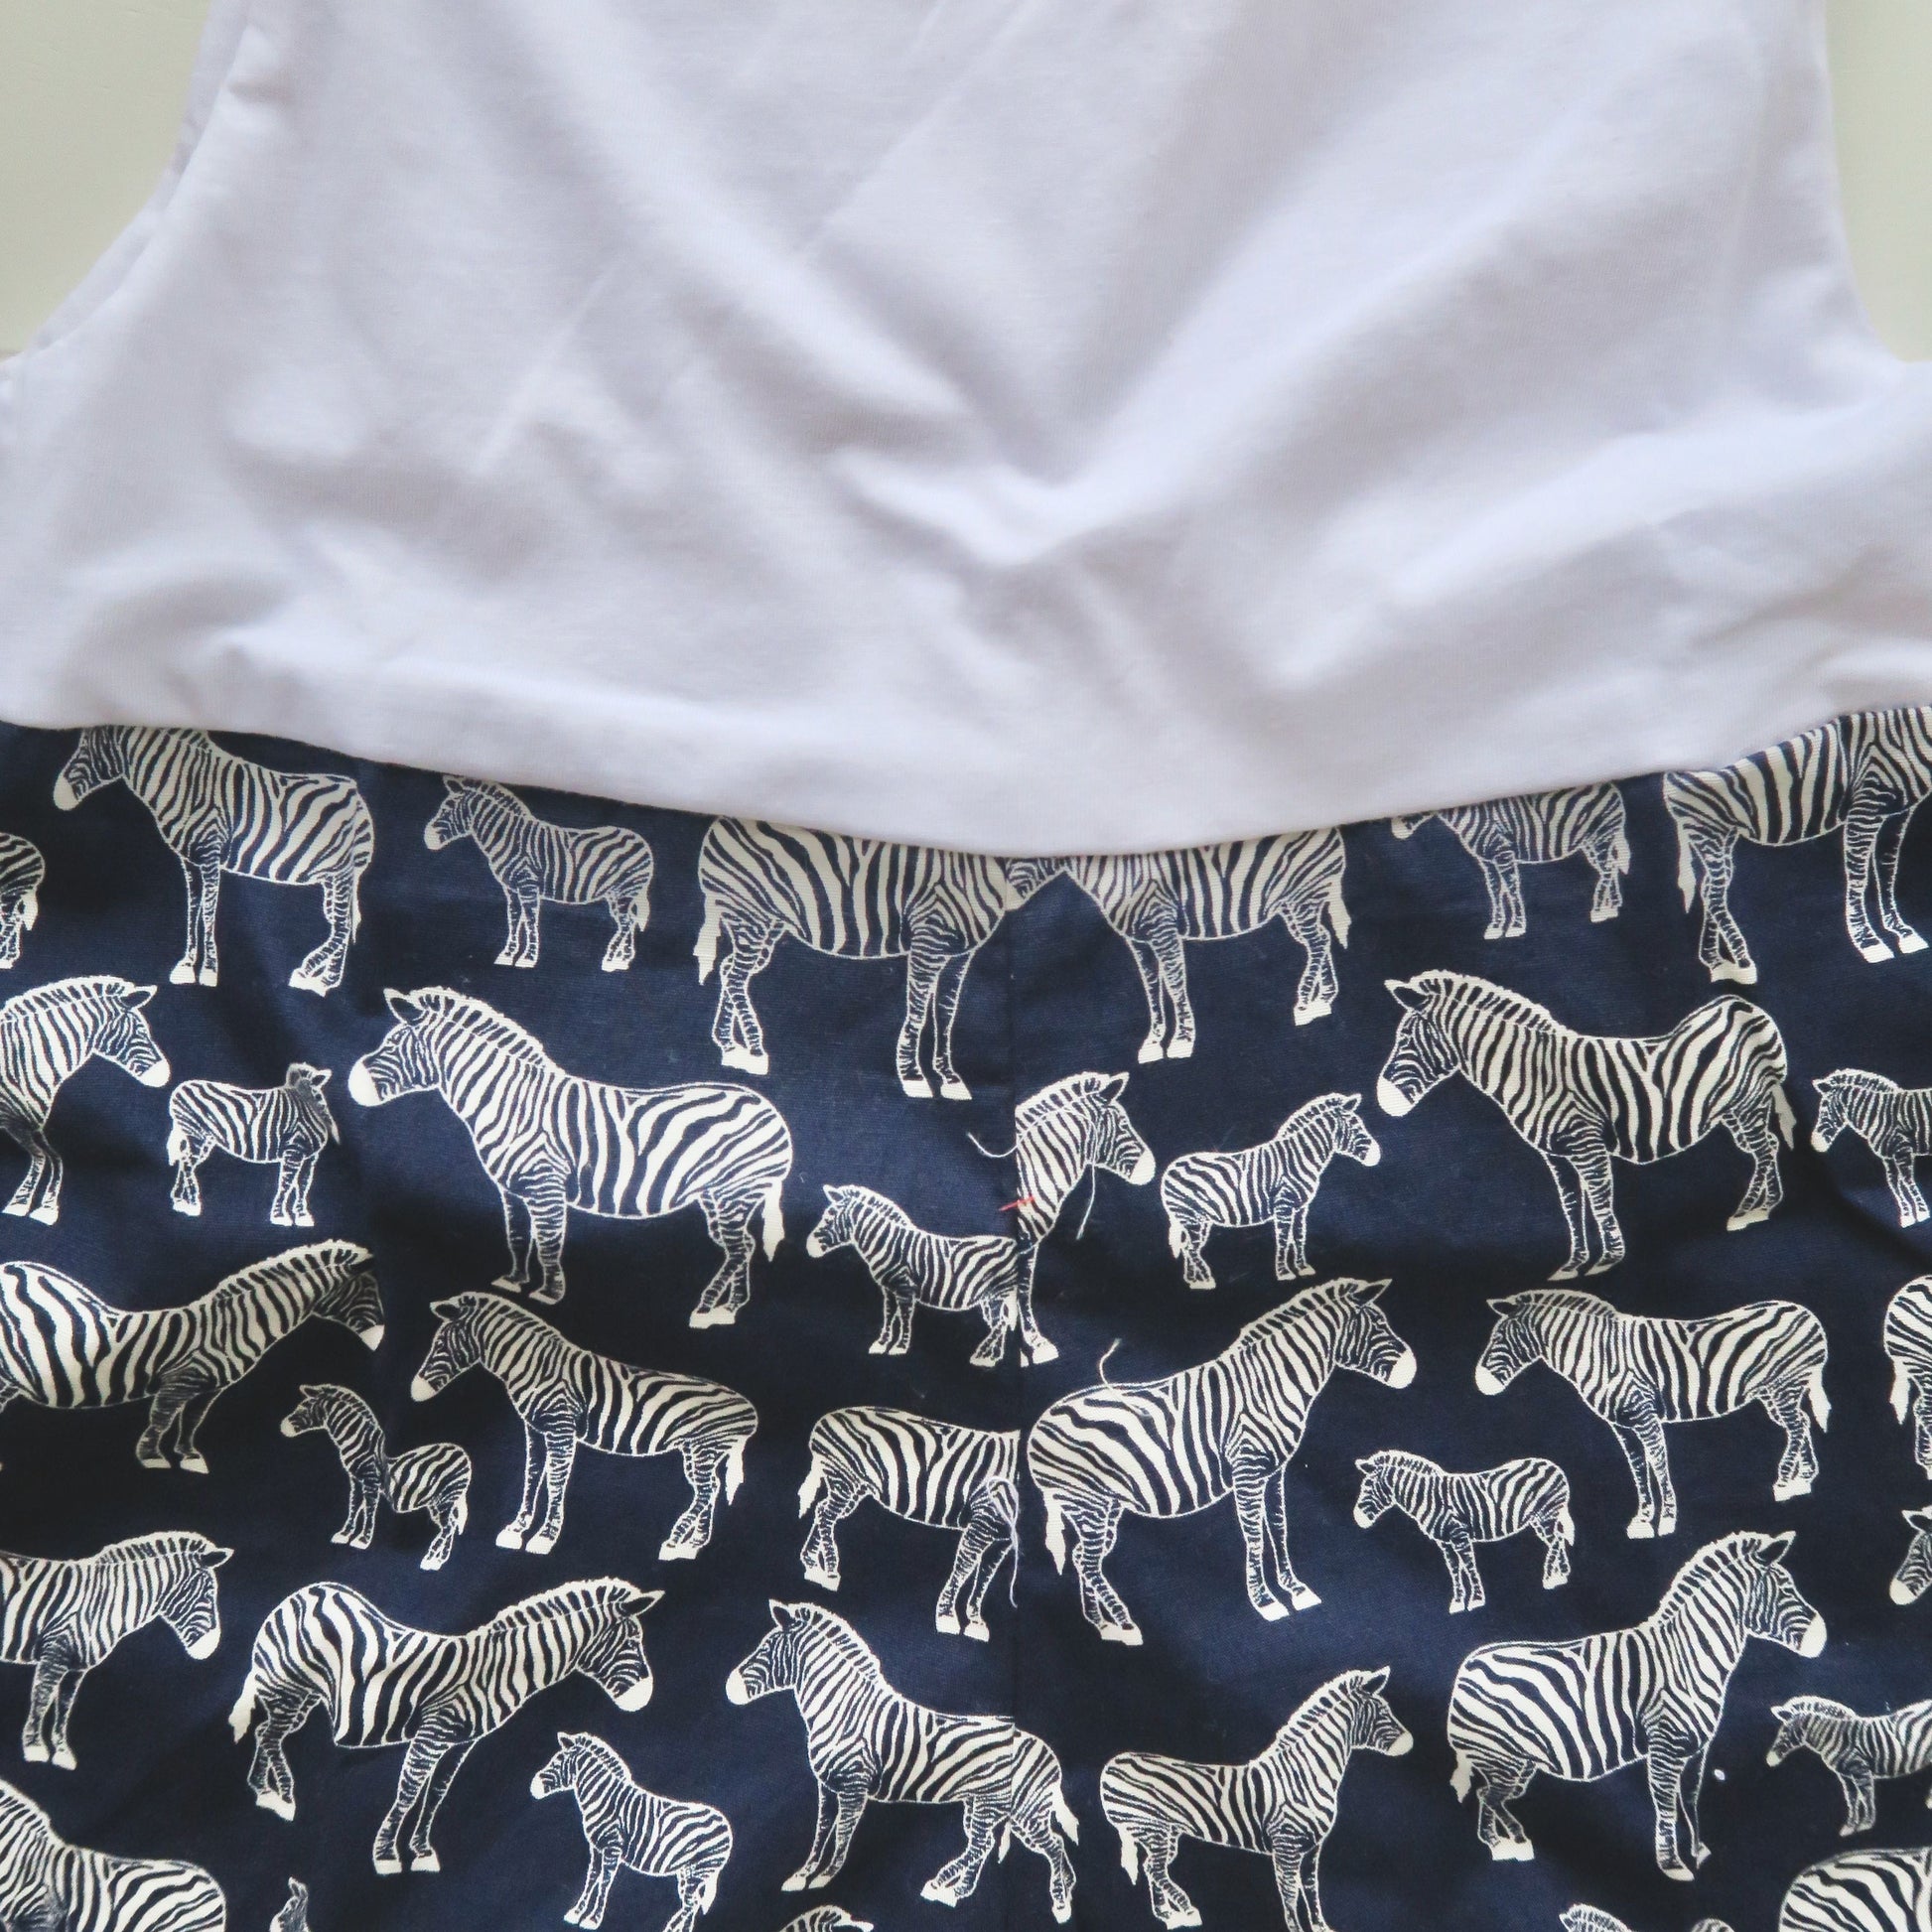 Oak Playsuit in White Stretch & Navy Zebra Print - Lil' Tati